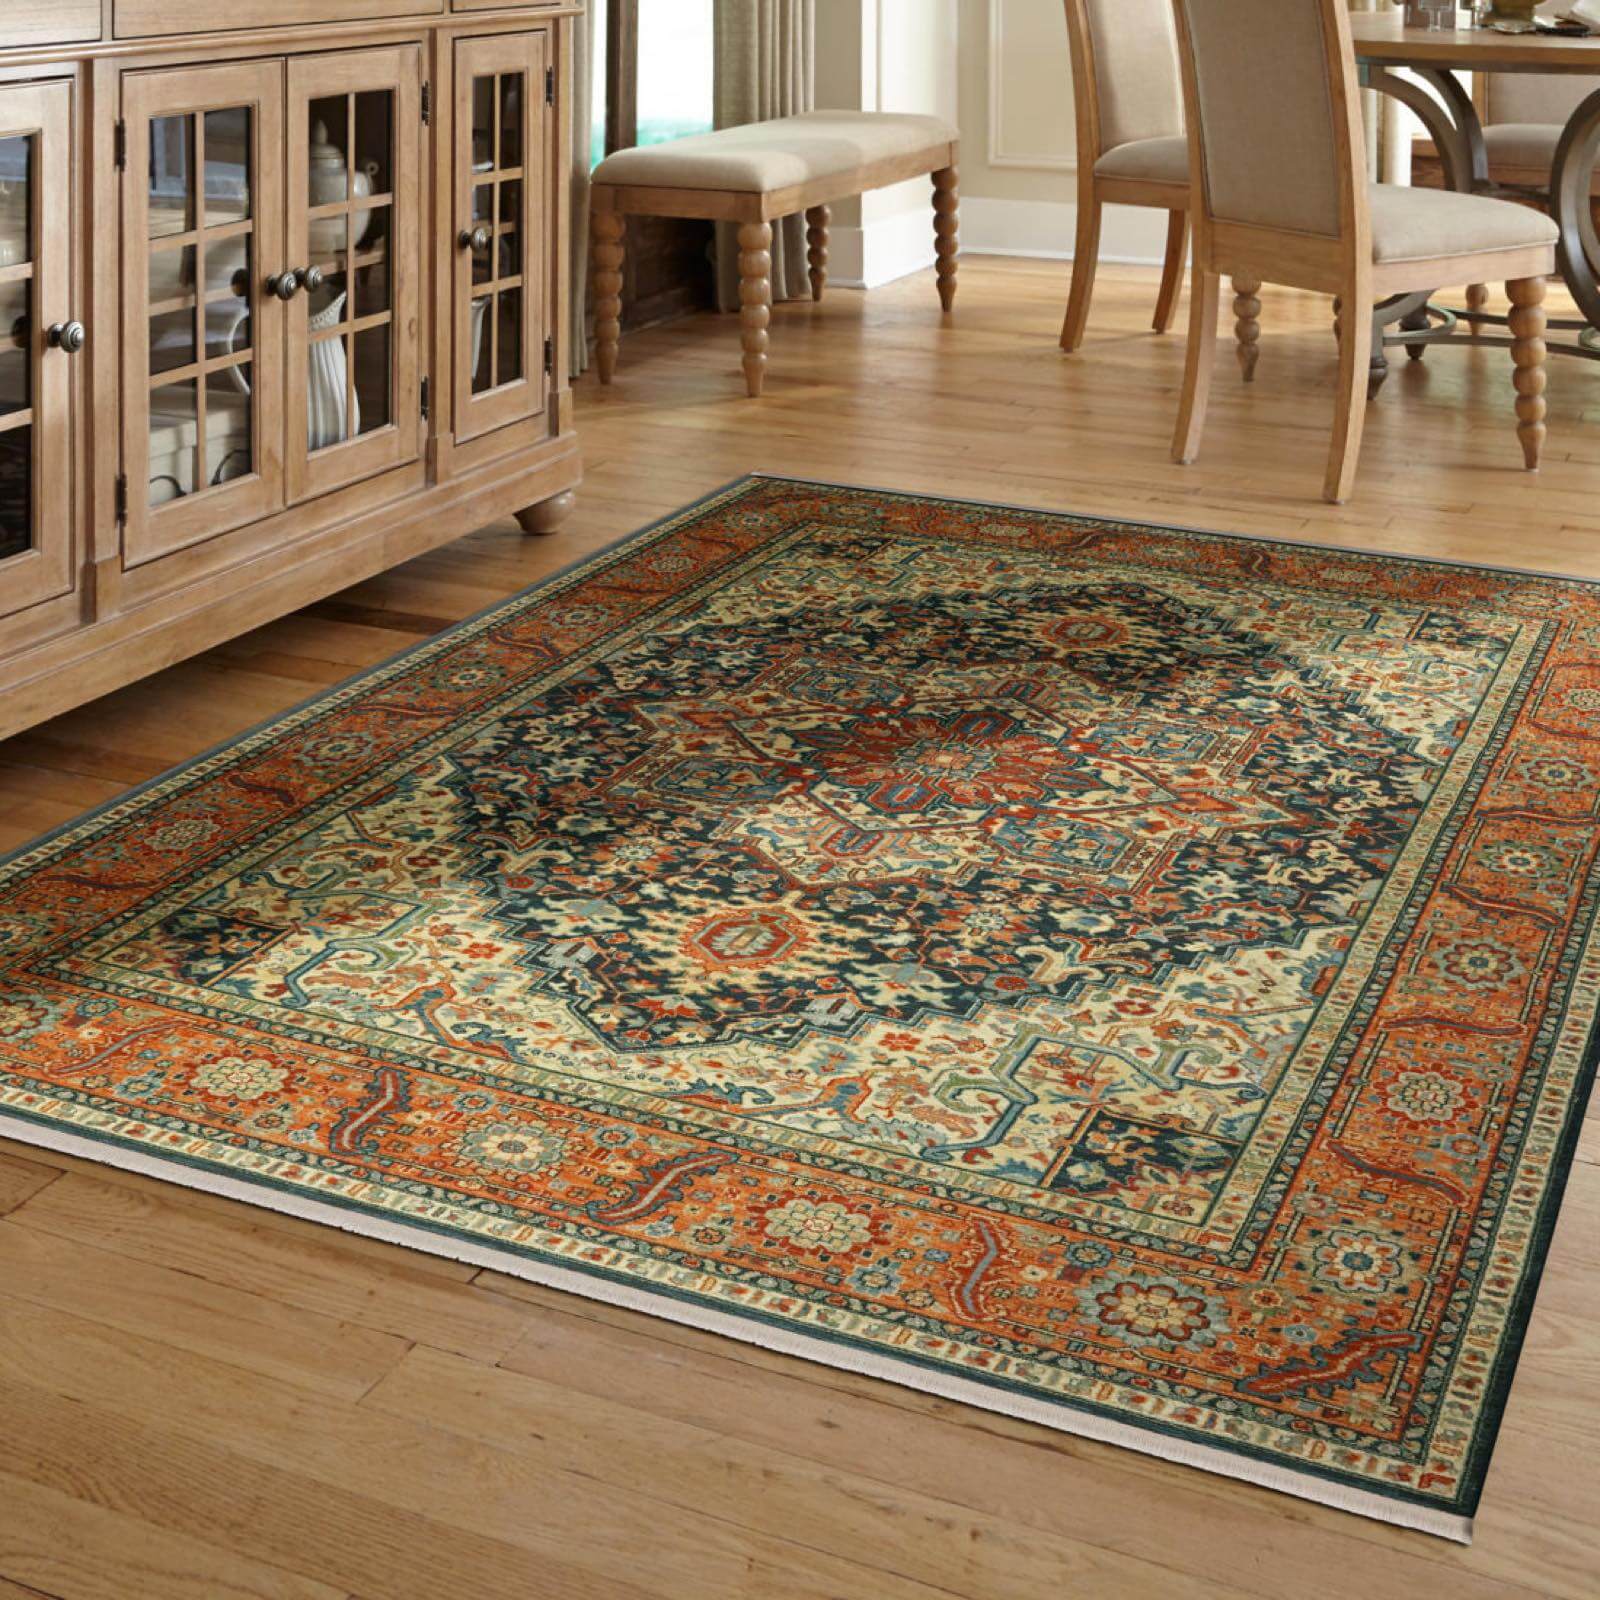 Area rug | Affordable Floors